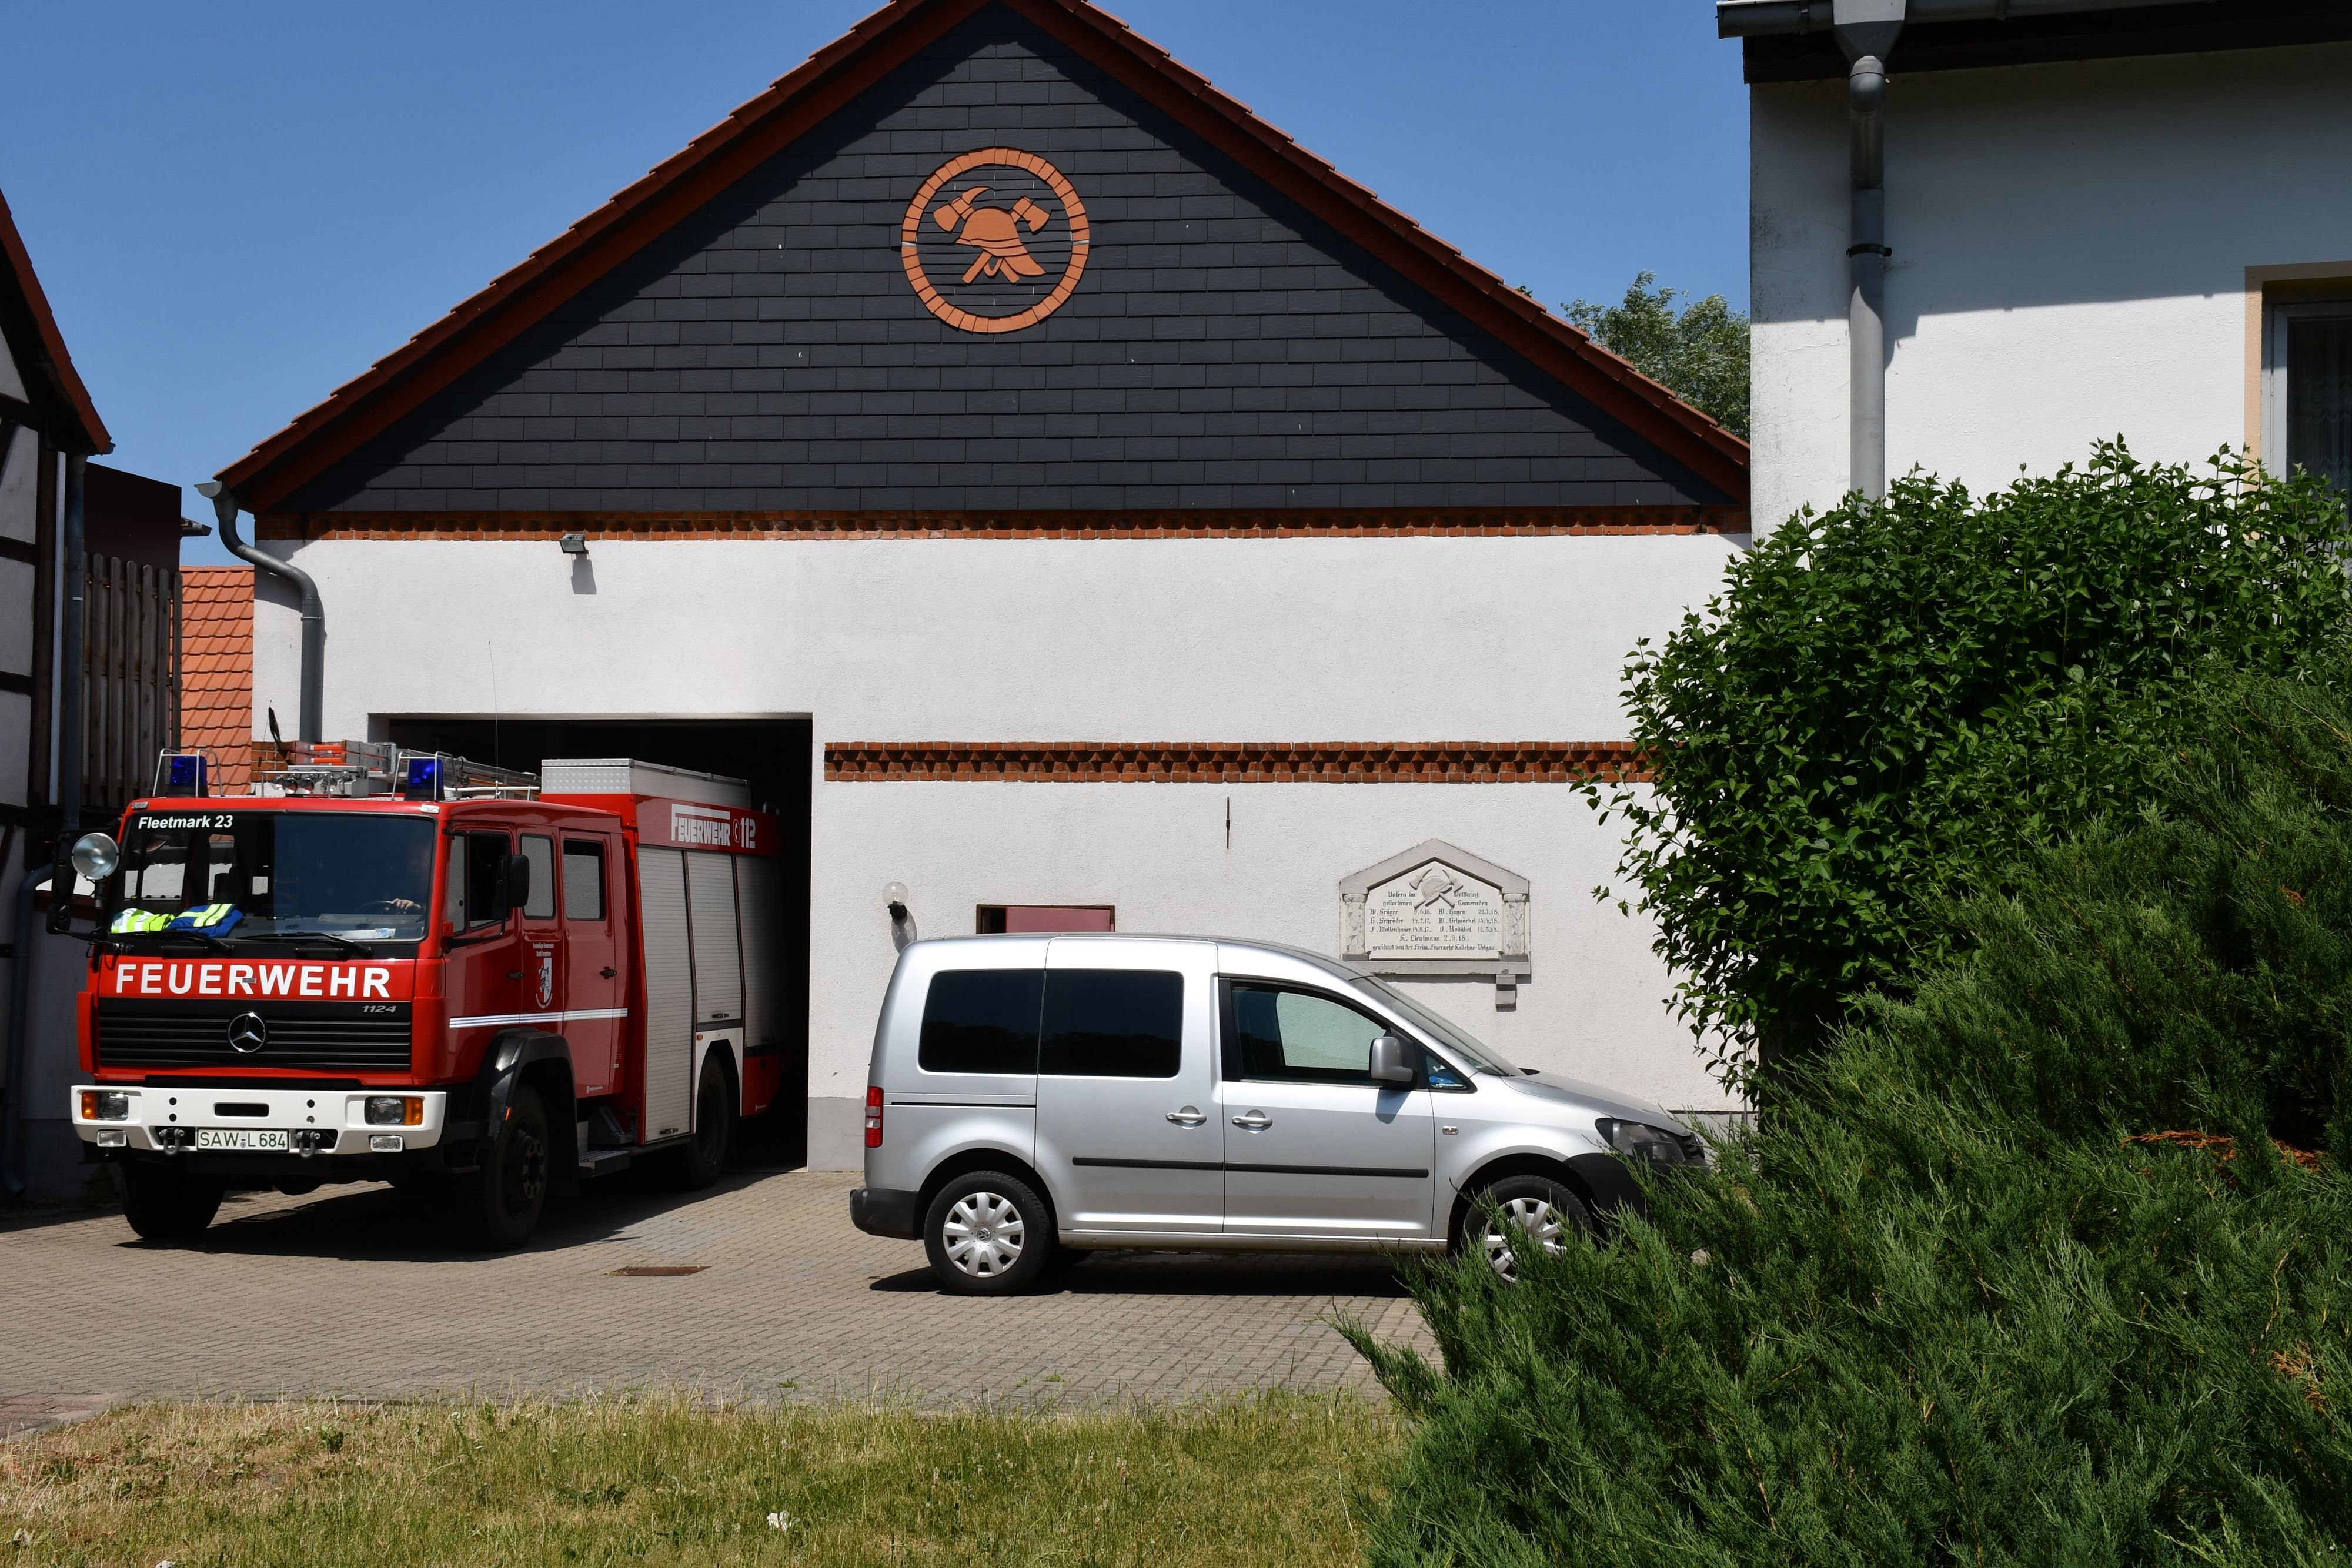 Finanzen in Arendsee: Klappt es mit dem Feuerwehrhaus in Fleetmark?